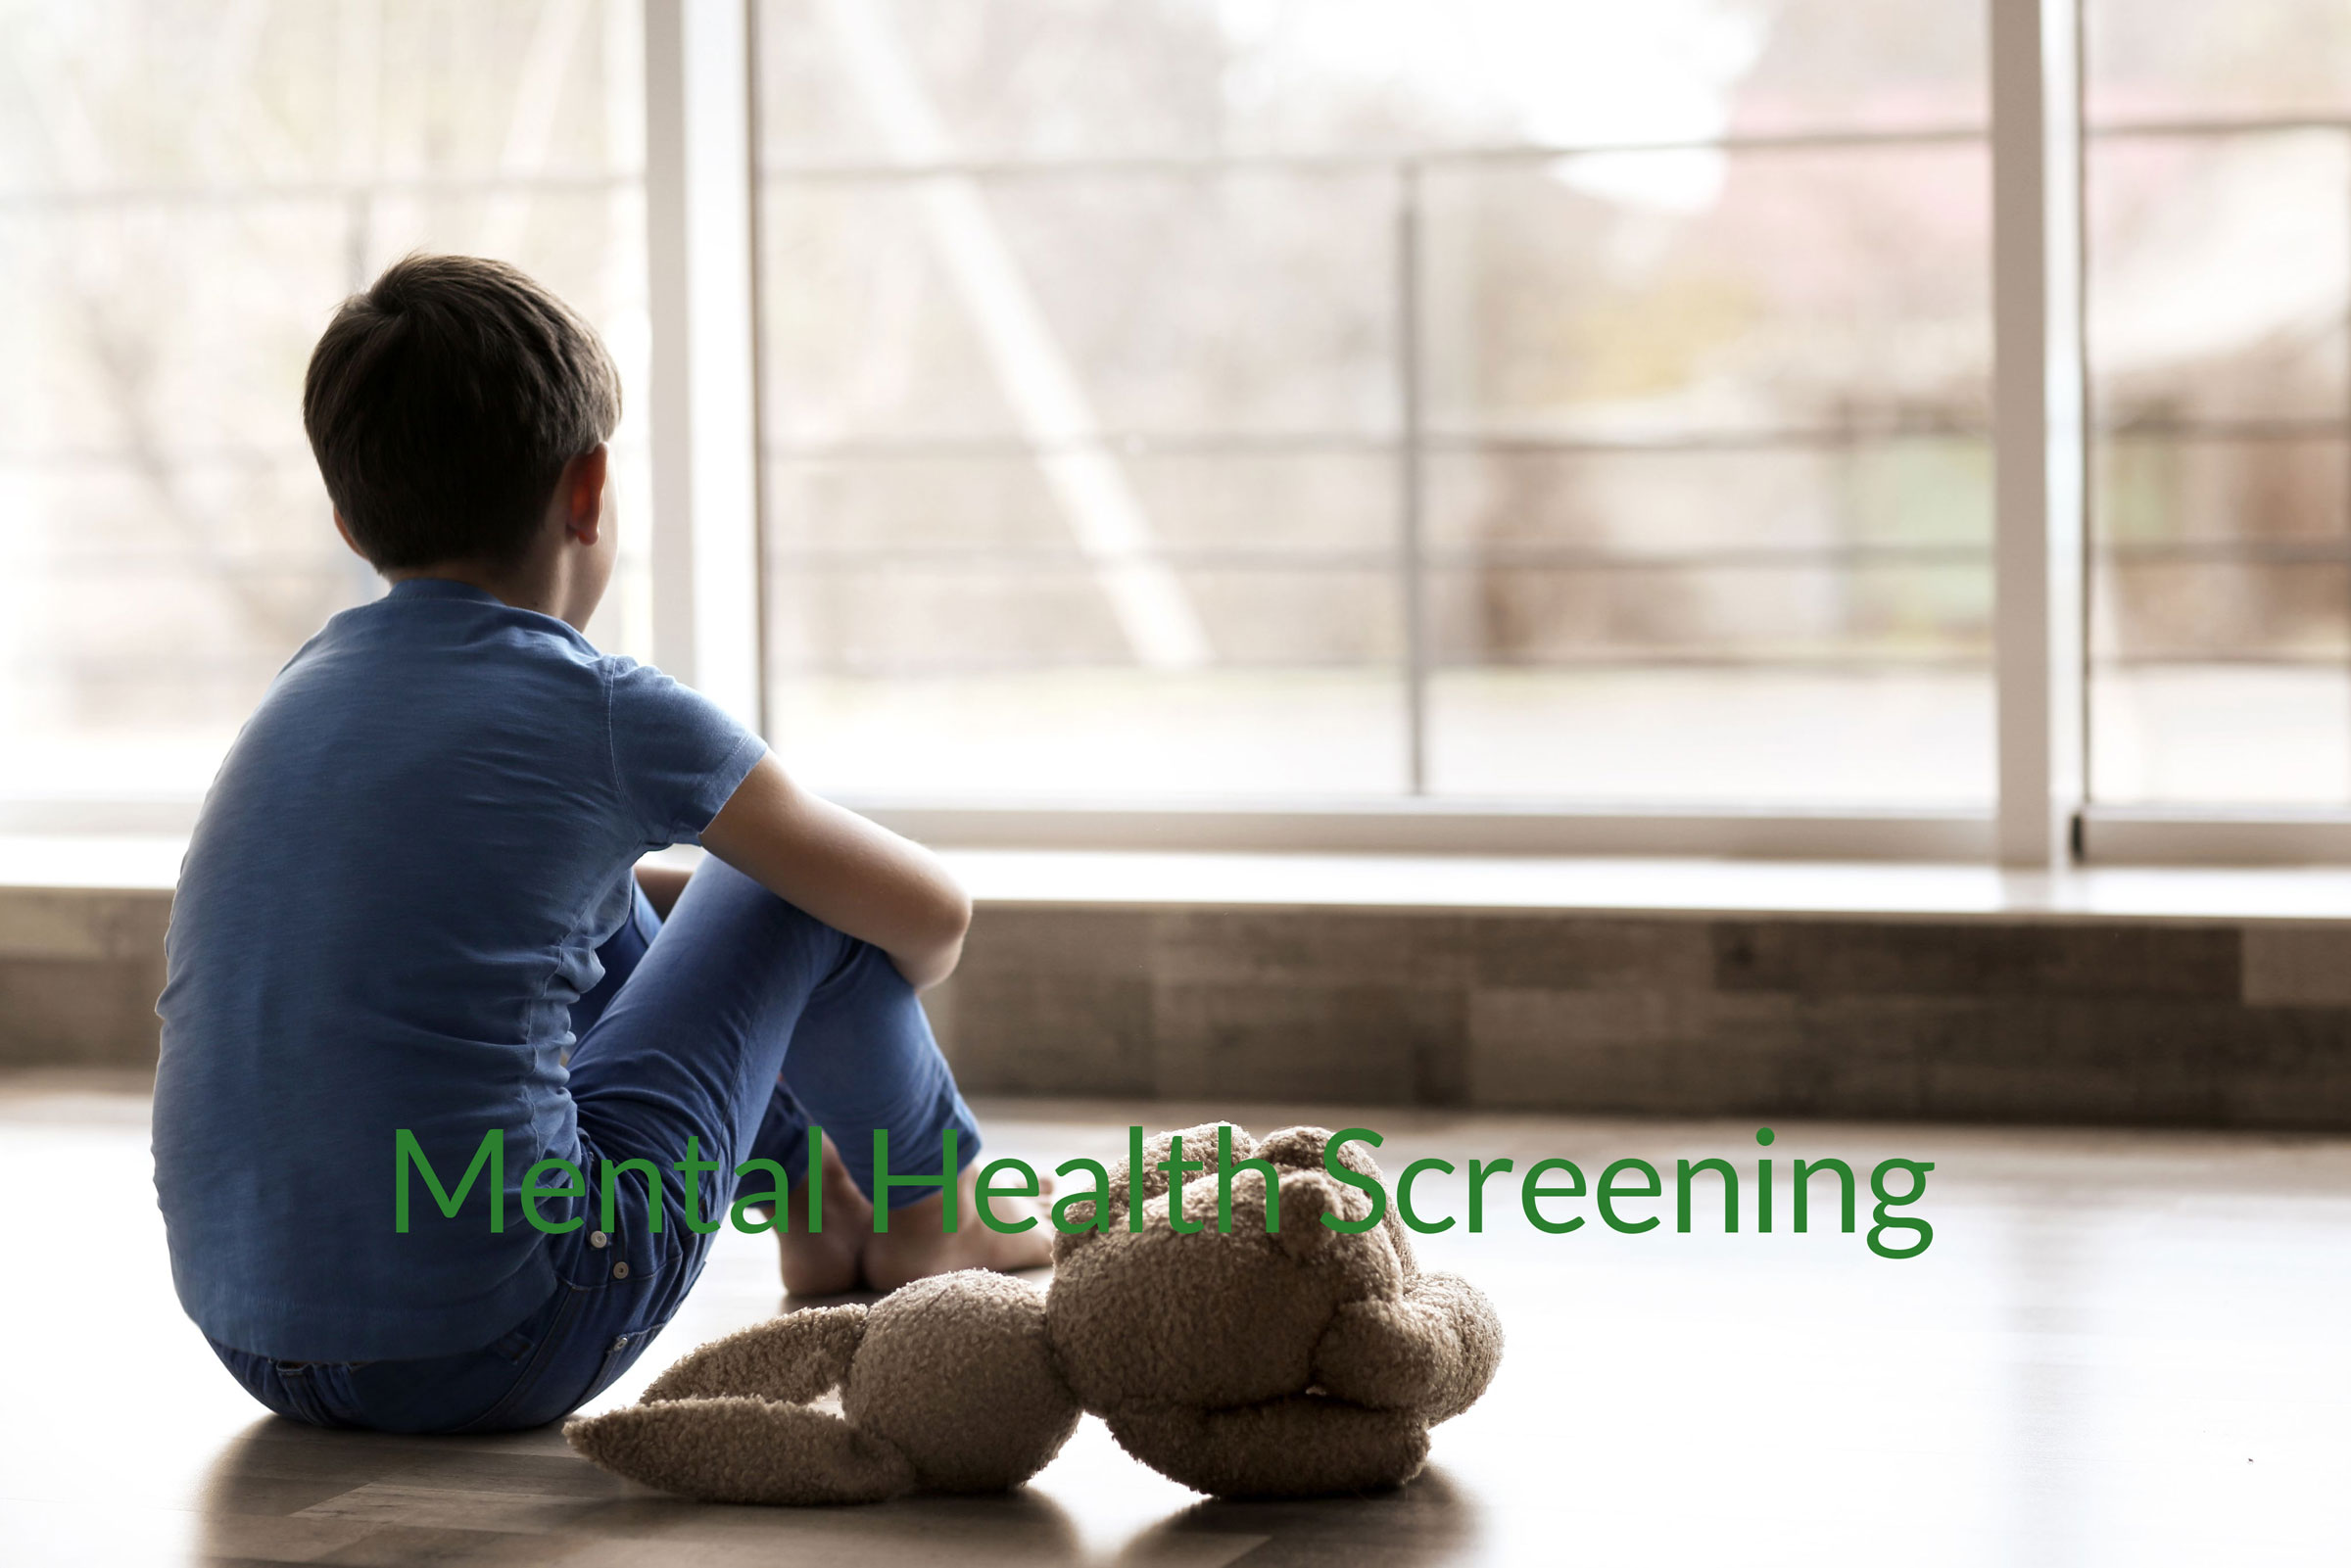 Mental Health Screening